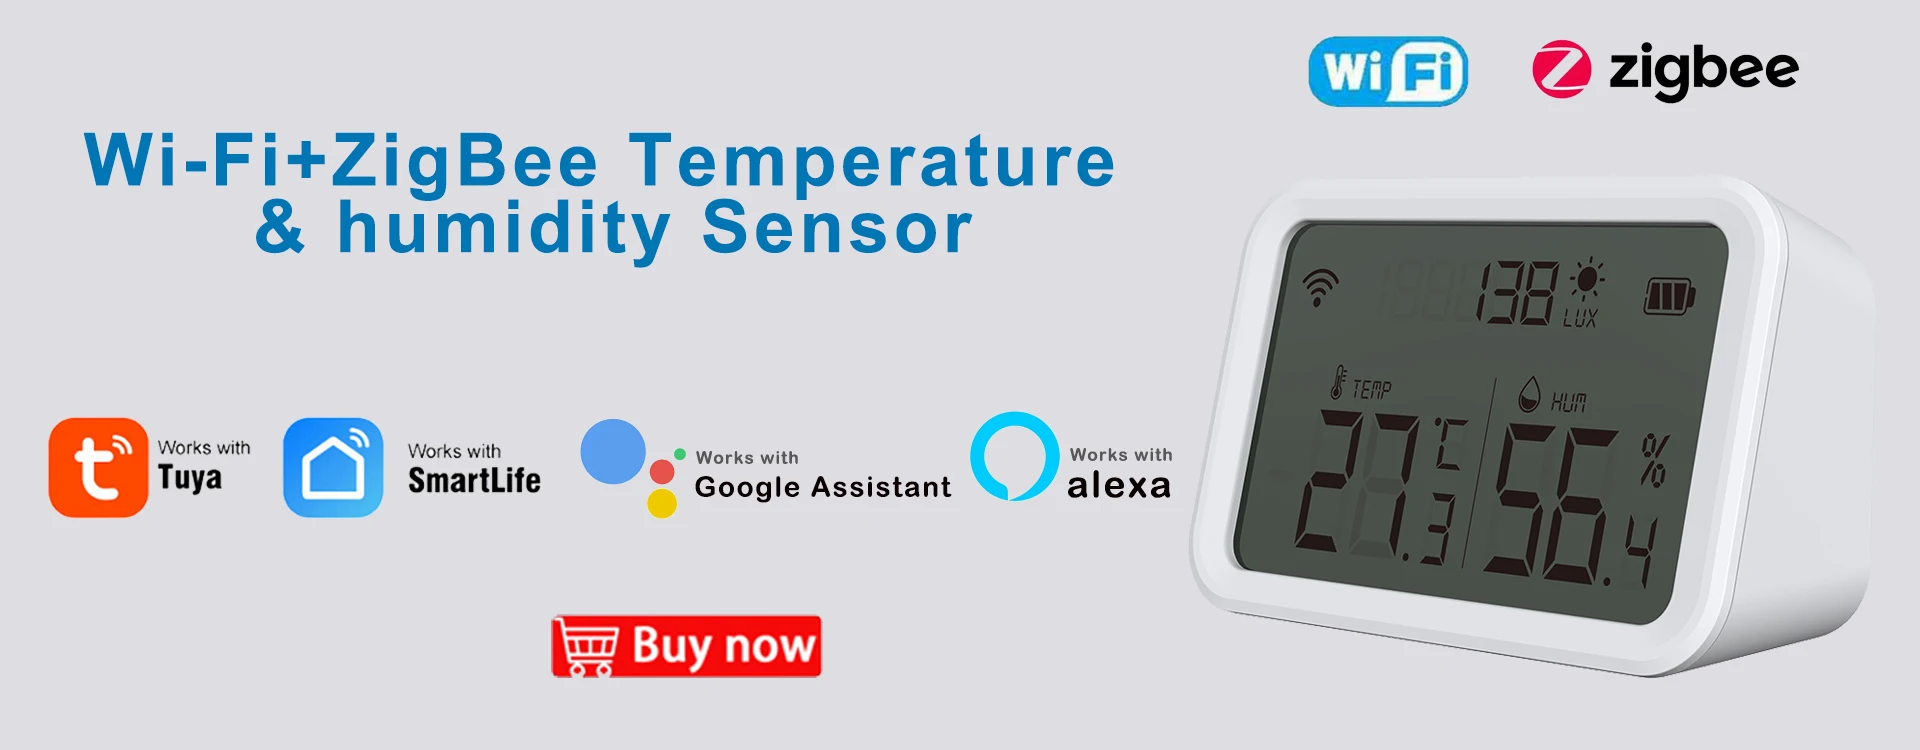 YOUYO TUYA Intelligenter Temperatursensor Wireless WiFi Indoor Thermometer LCD Display Fernüberwachung Kompatibel mit Alexa und Google Assistant